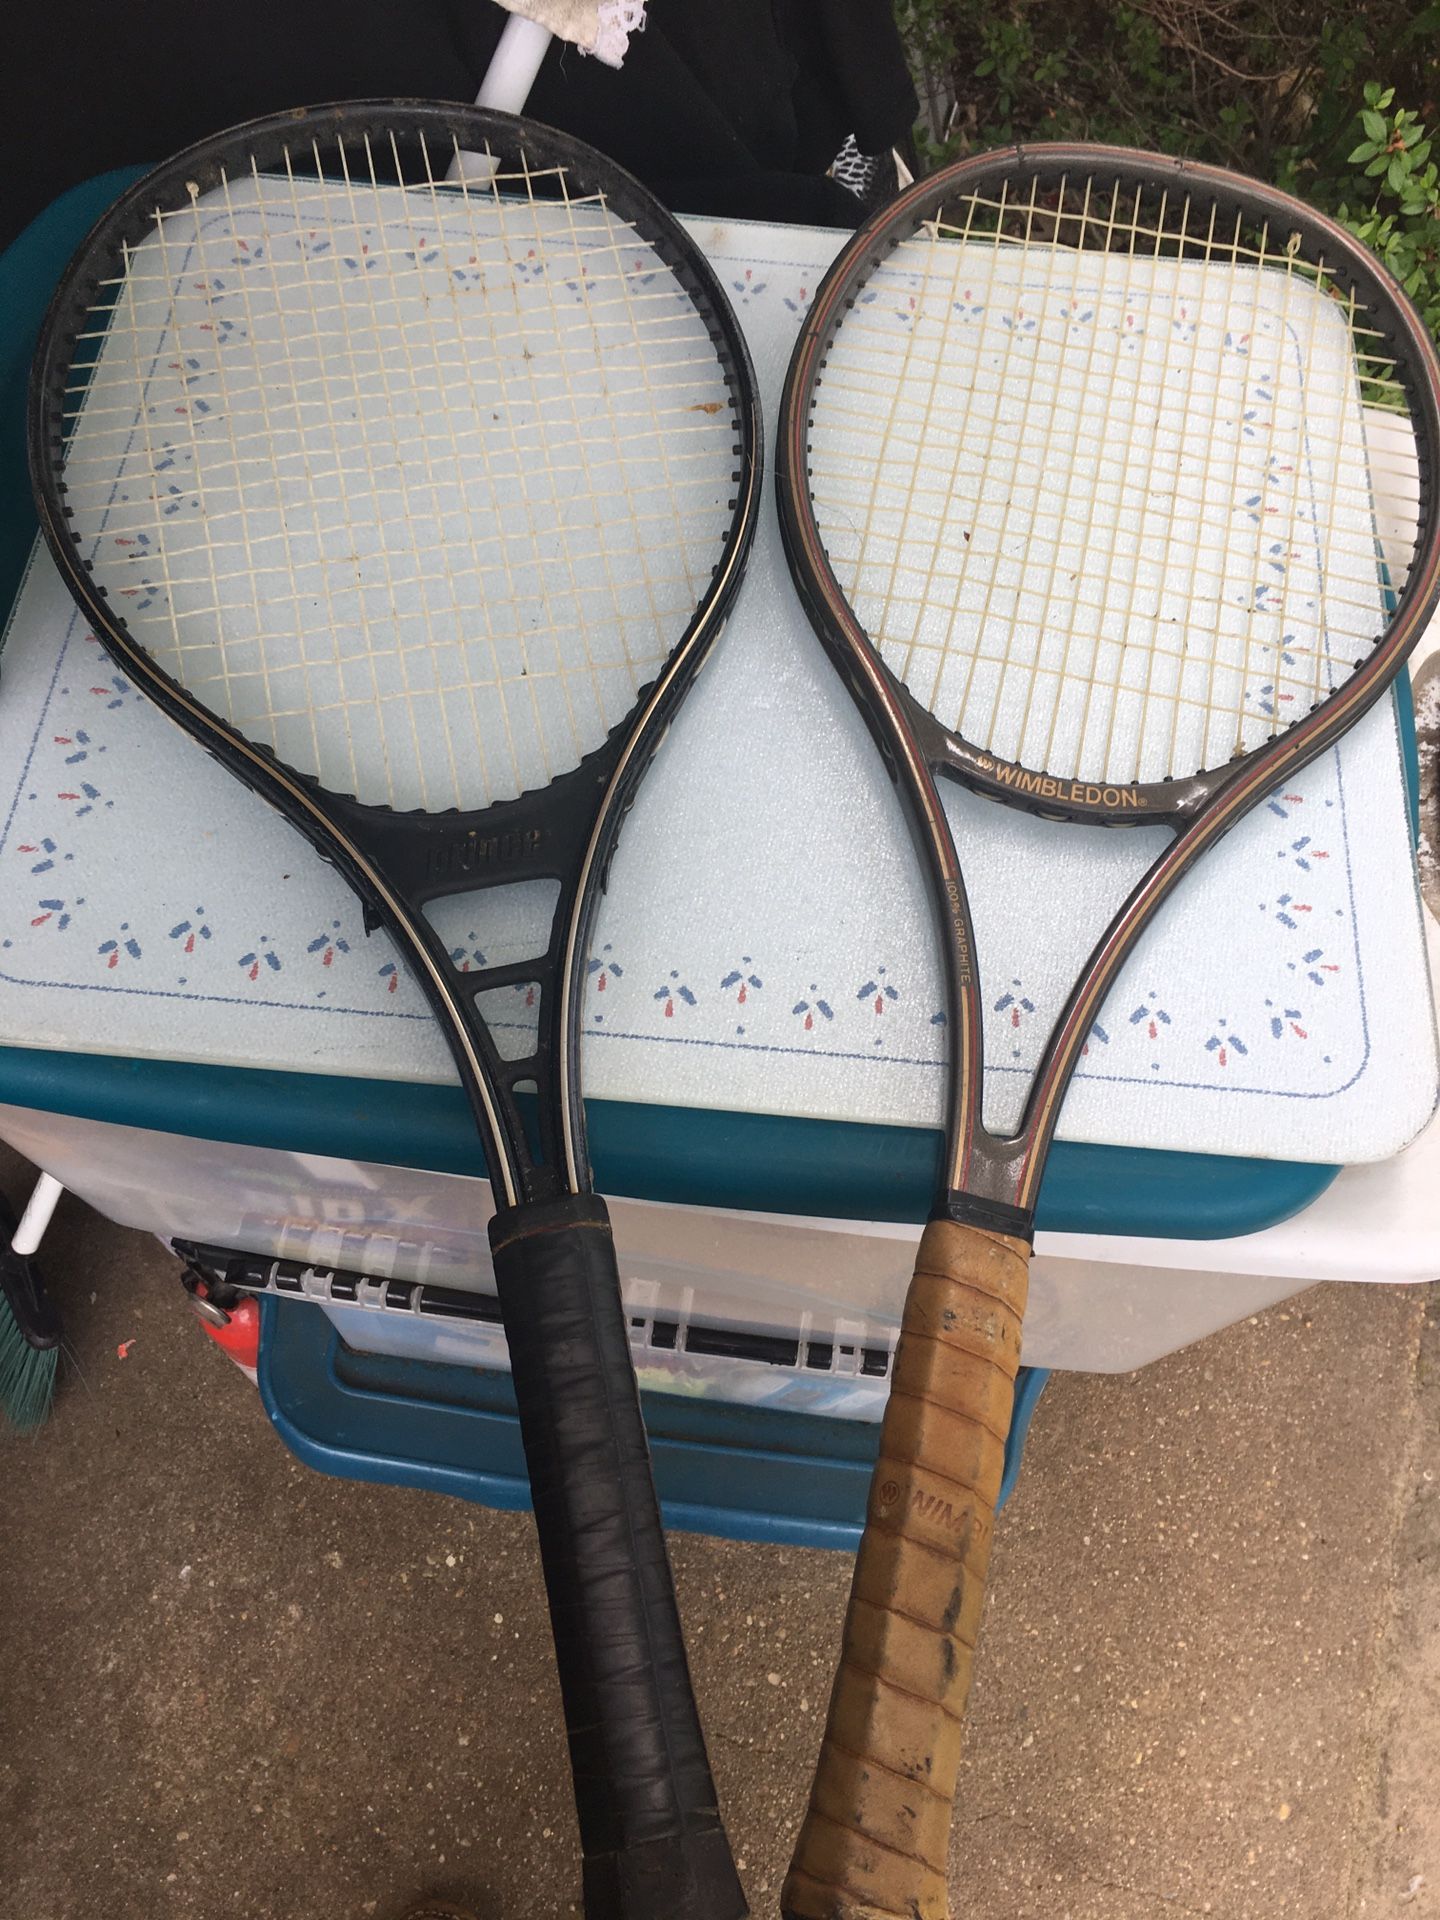 Tennis rackets only $10 each firm